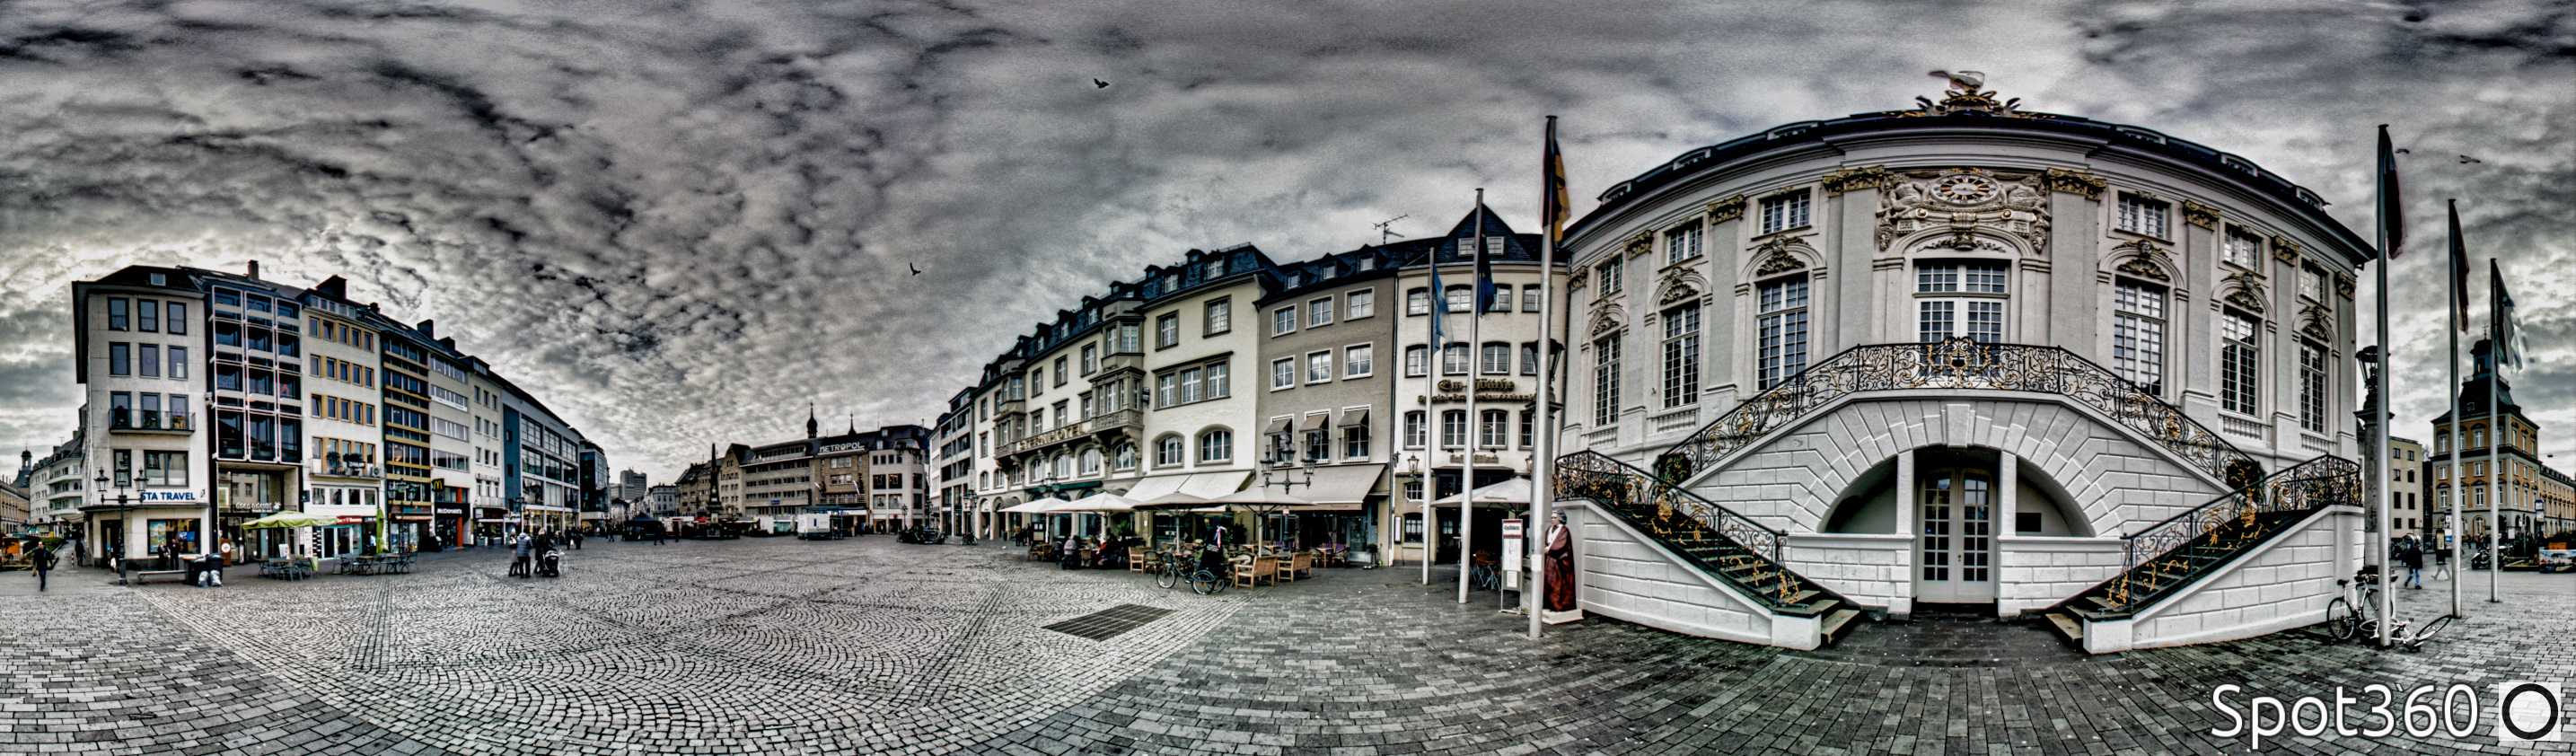 360 photos in Bonn with the Iris360